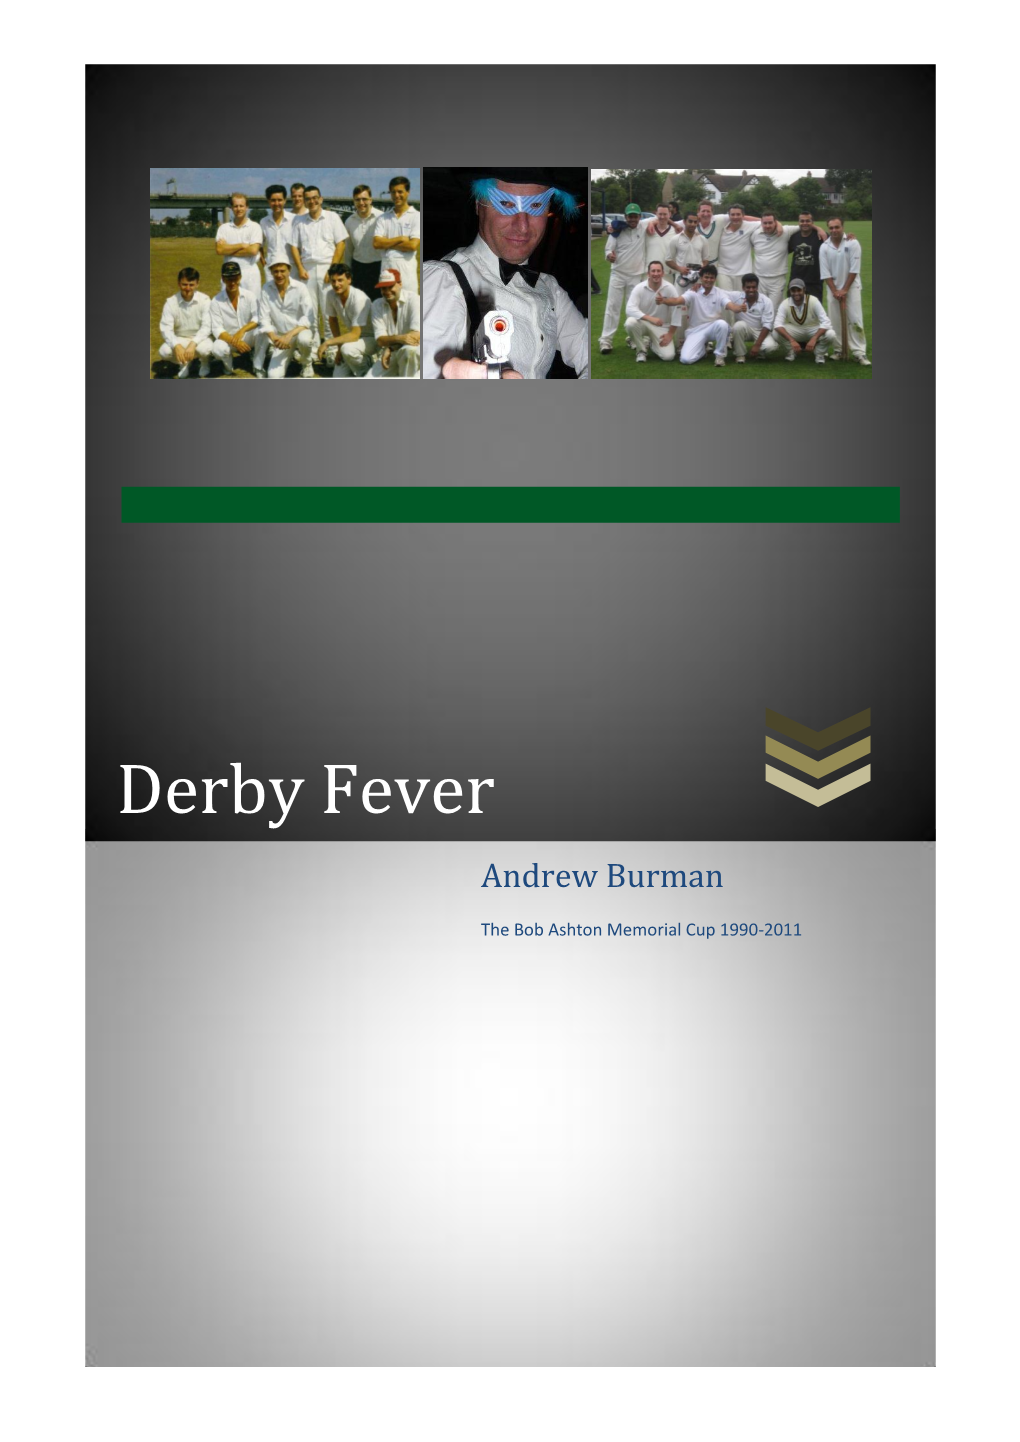 Derby Fever Andrew Burman